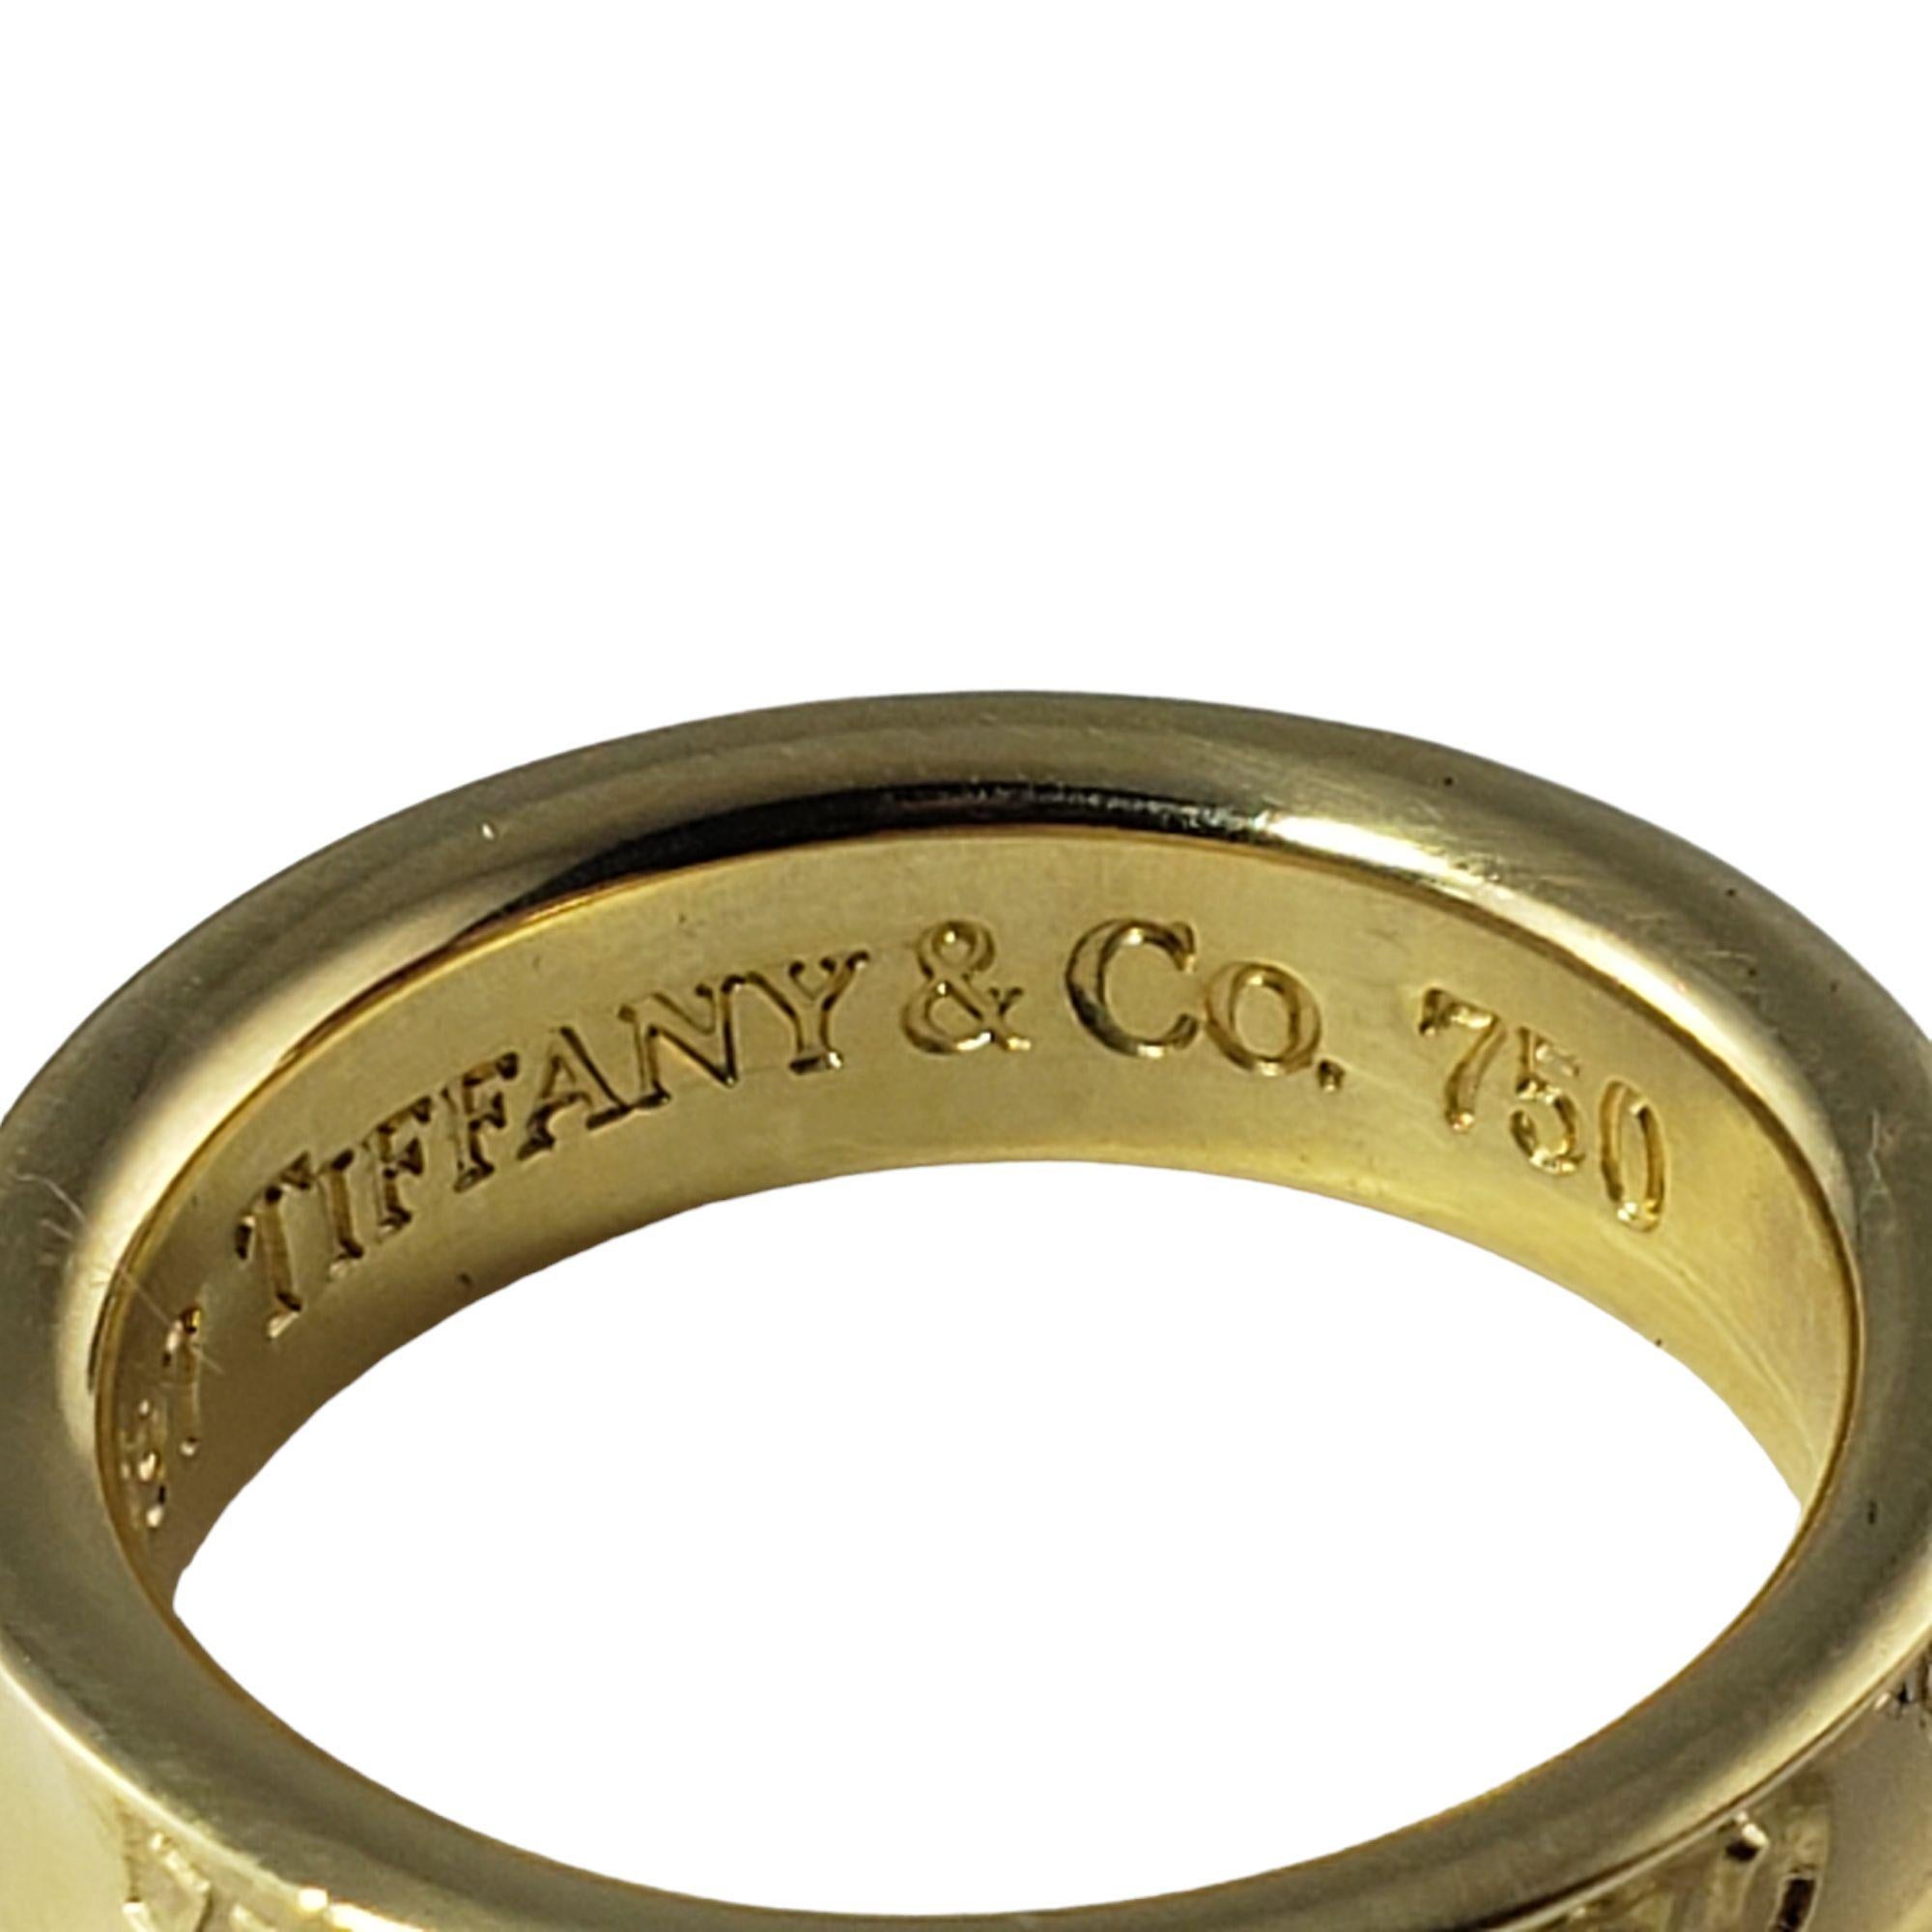  Tiffany & Co. 1837 18 Karat Yellow Gold Band Ring Size 7.5 2